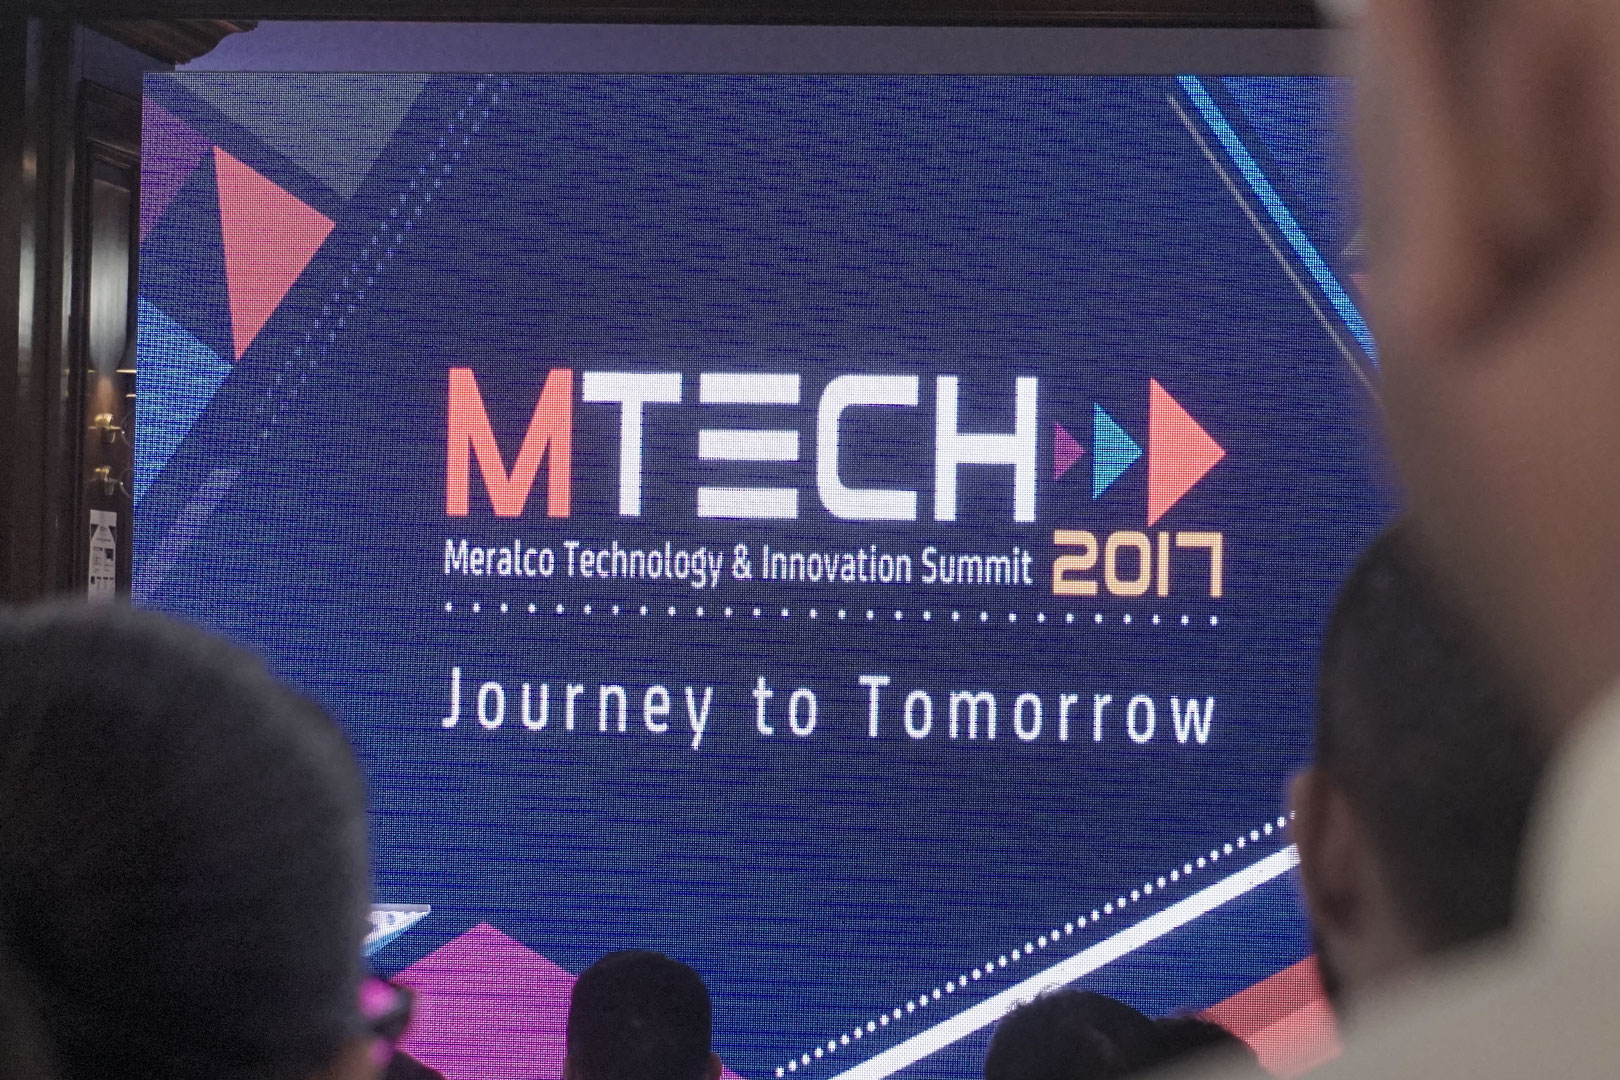 MTECH 2017 Showcases Meralco’s New Digital Innovations